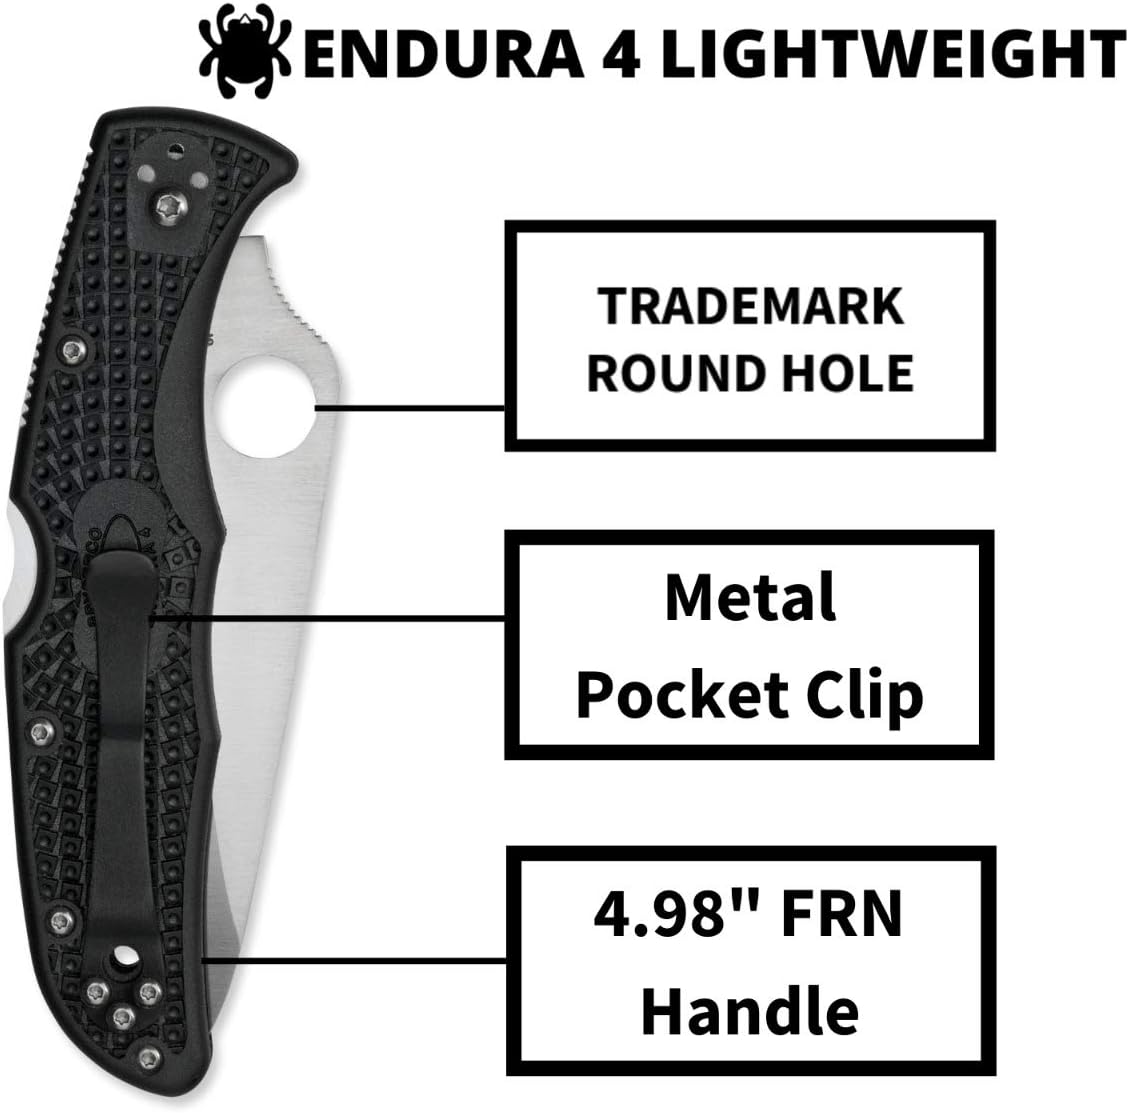 Spyderco, Endura 4 Lightweight Signature Knife with 3.80" VG-10 Steel Blade and FRN Handle - PlainEdge - C10PBK